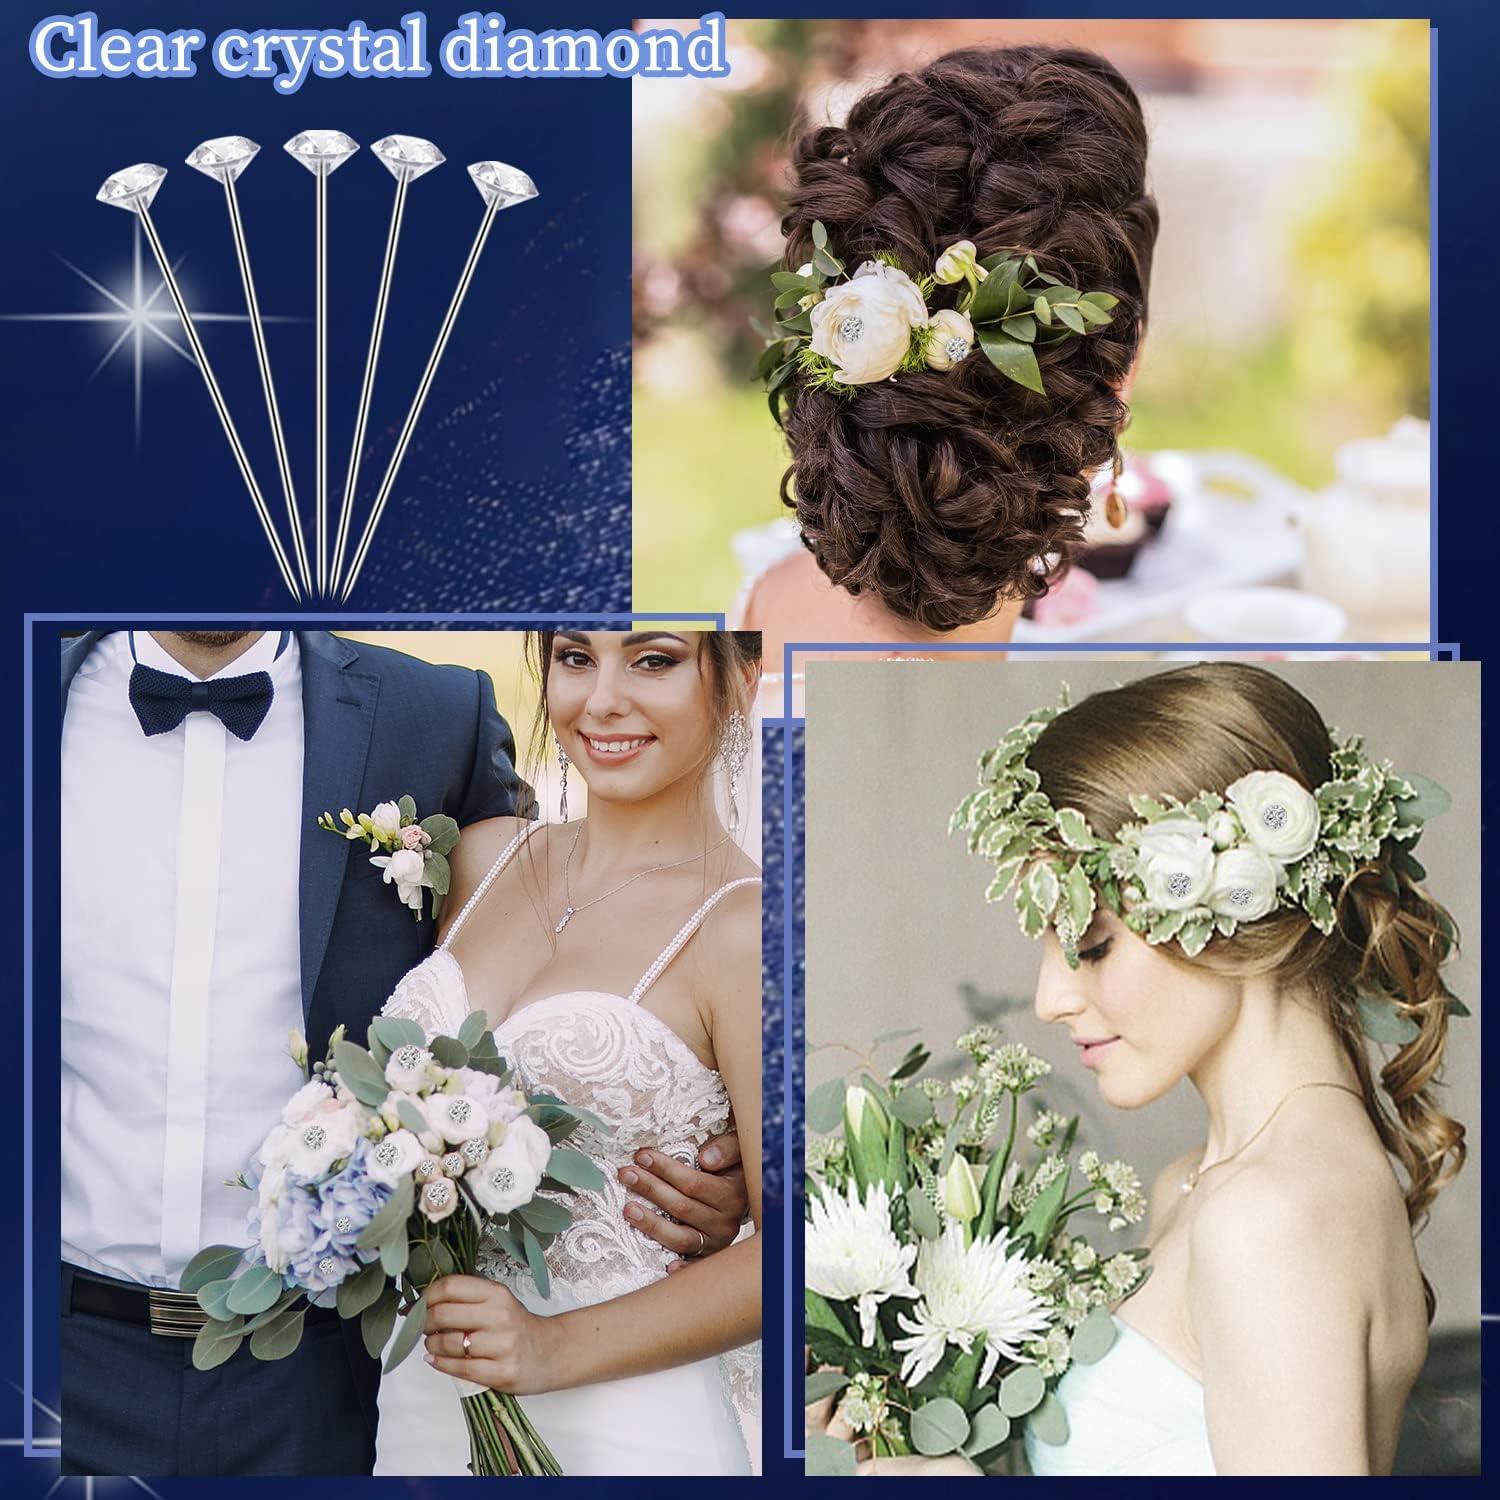 100 Pcs Crystal Pins for Bouquet 1.5 Inch Flower Corsage Pins Clear  Straight Pins Diamond Rhinestone Pins for Flower Arrangement DIY Crafts  Wedding